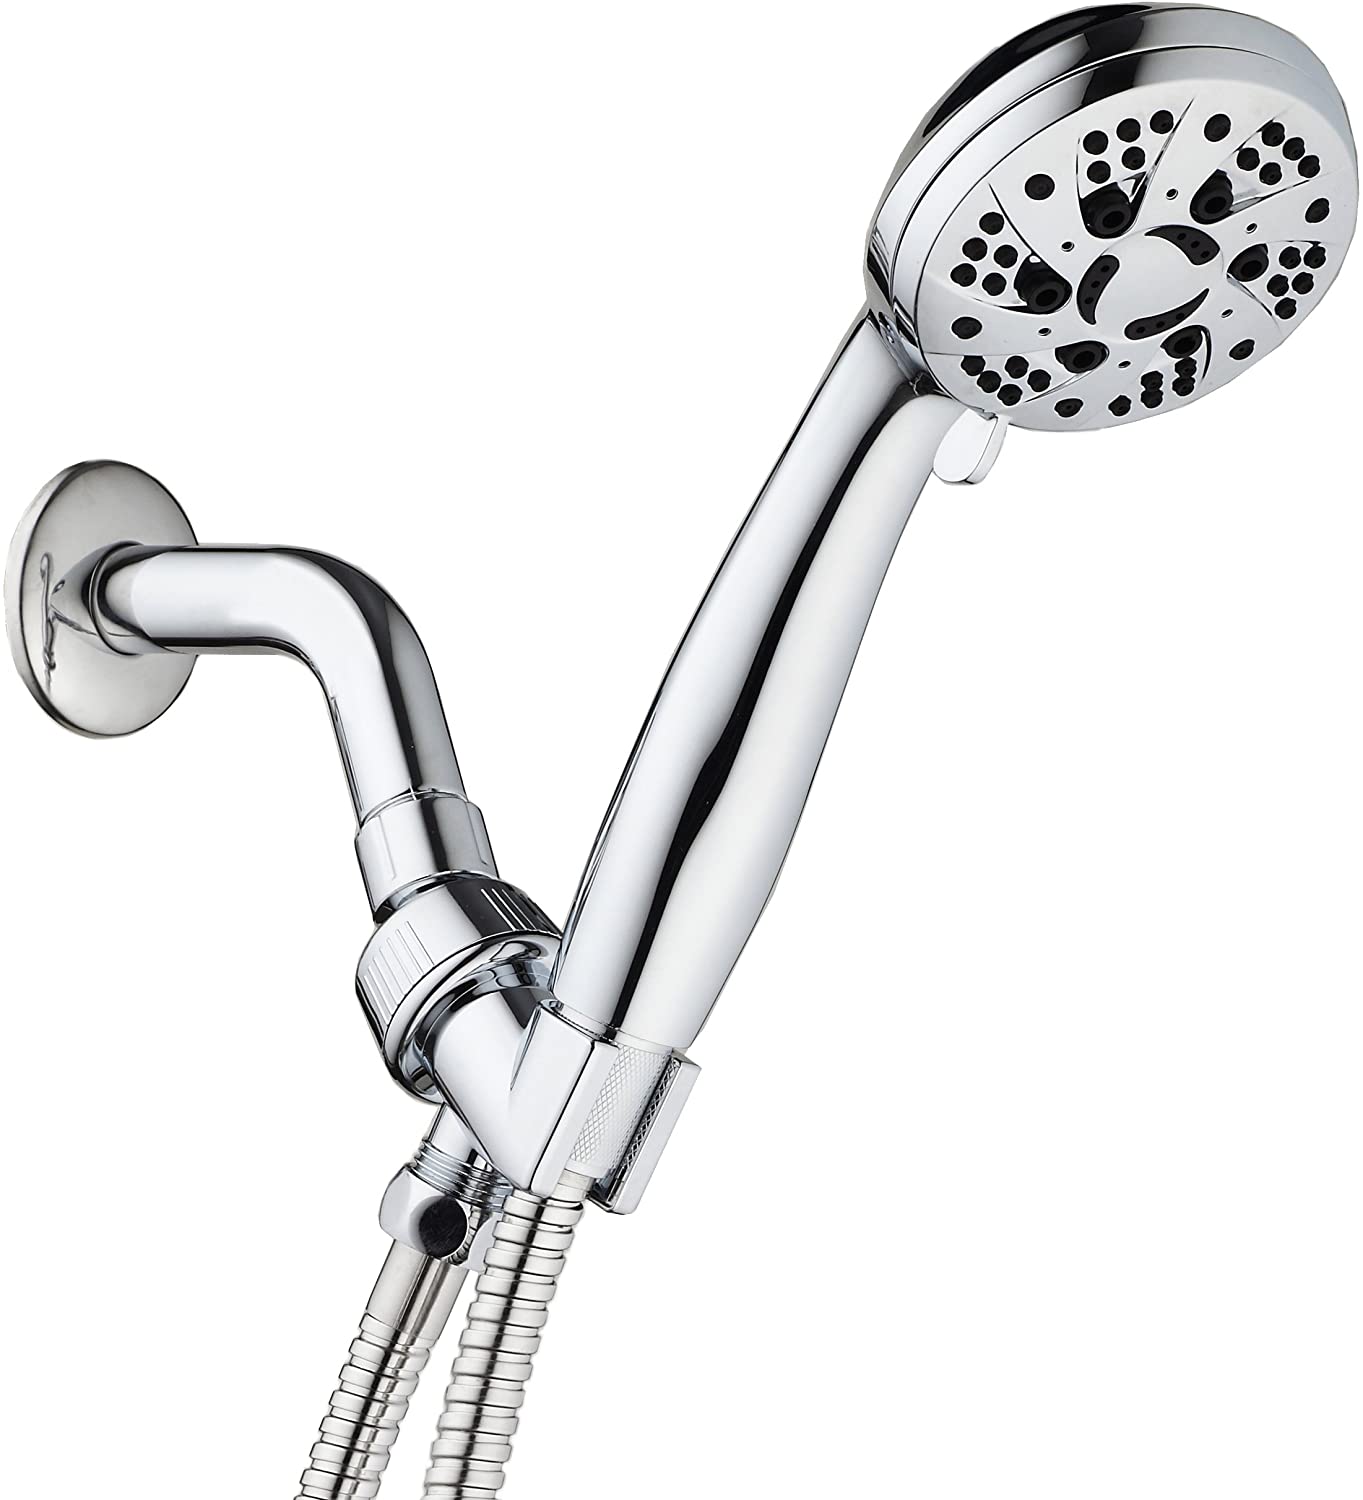 AquaDance High-Pressure Handheld Shower with Hose